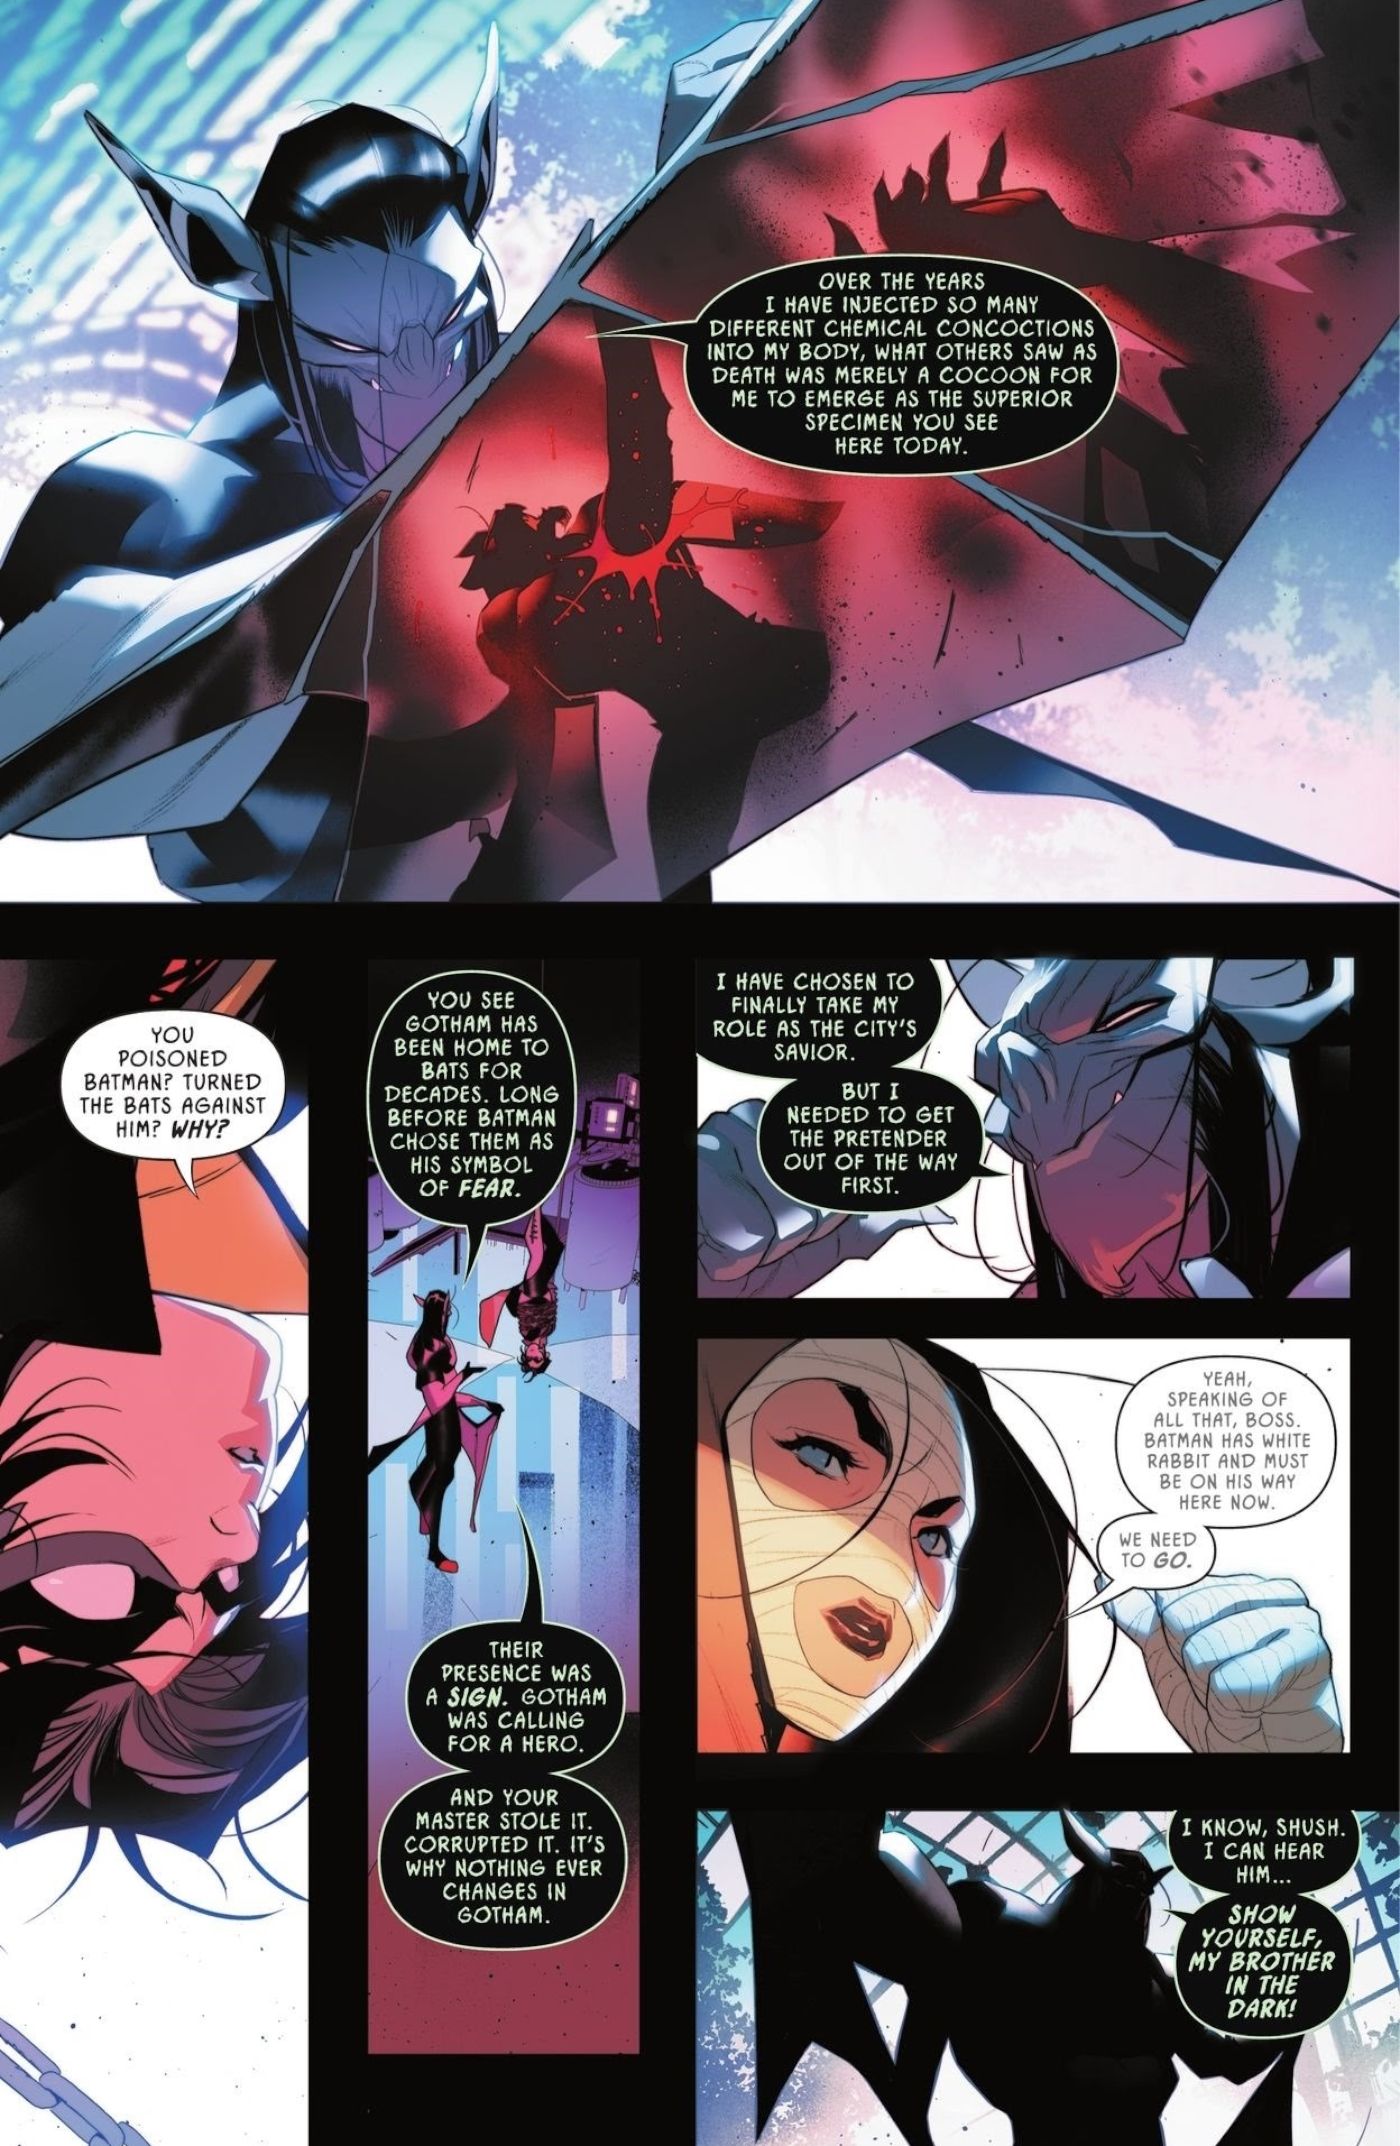 Man-Bat explains he can not be killed